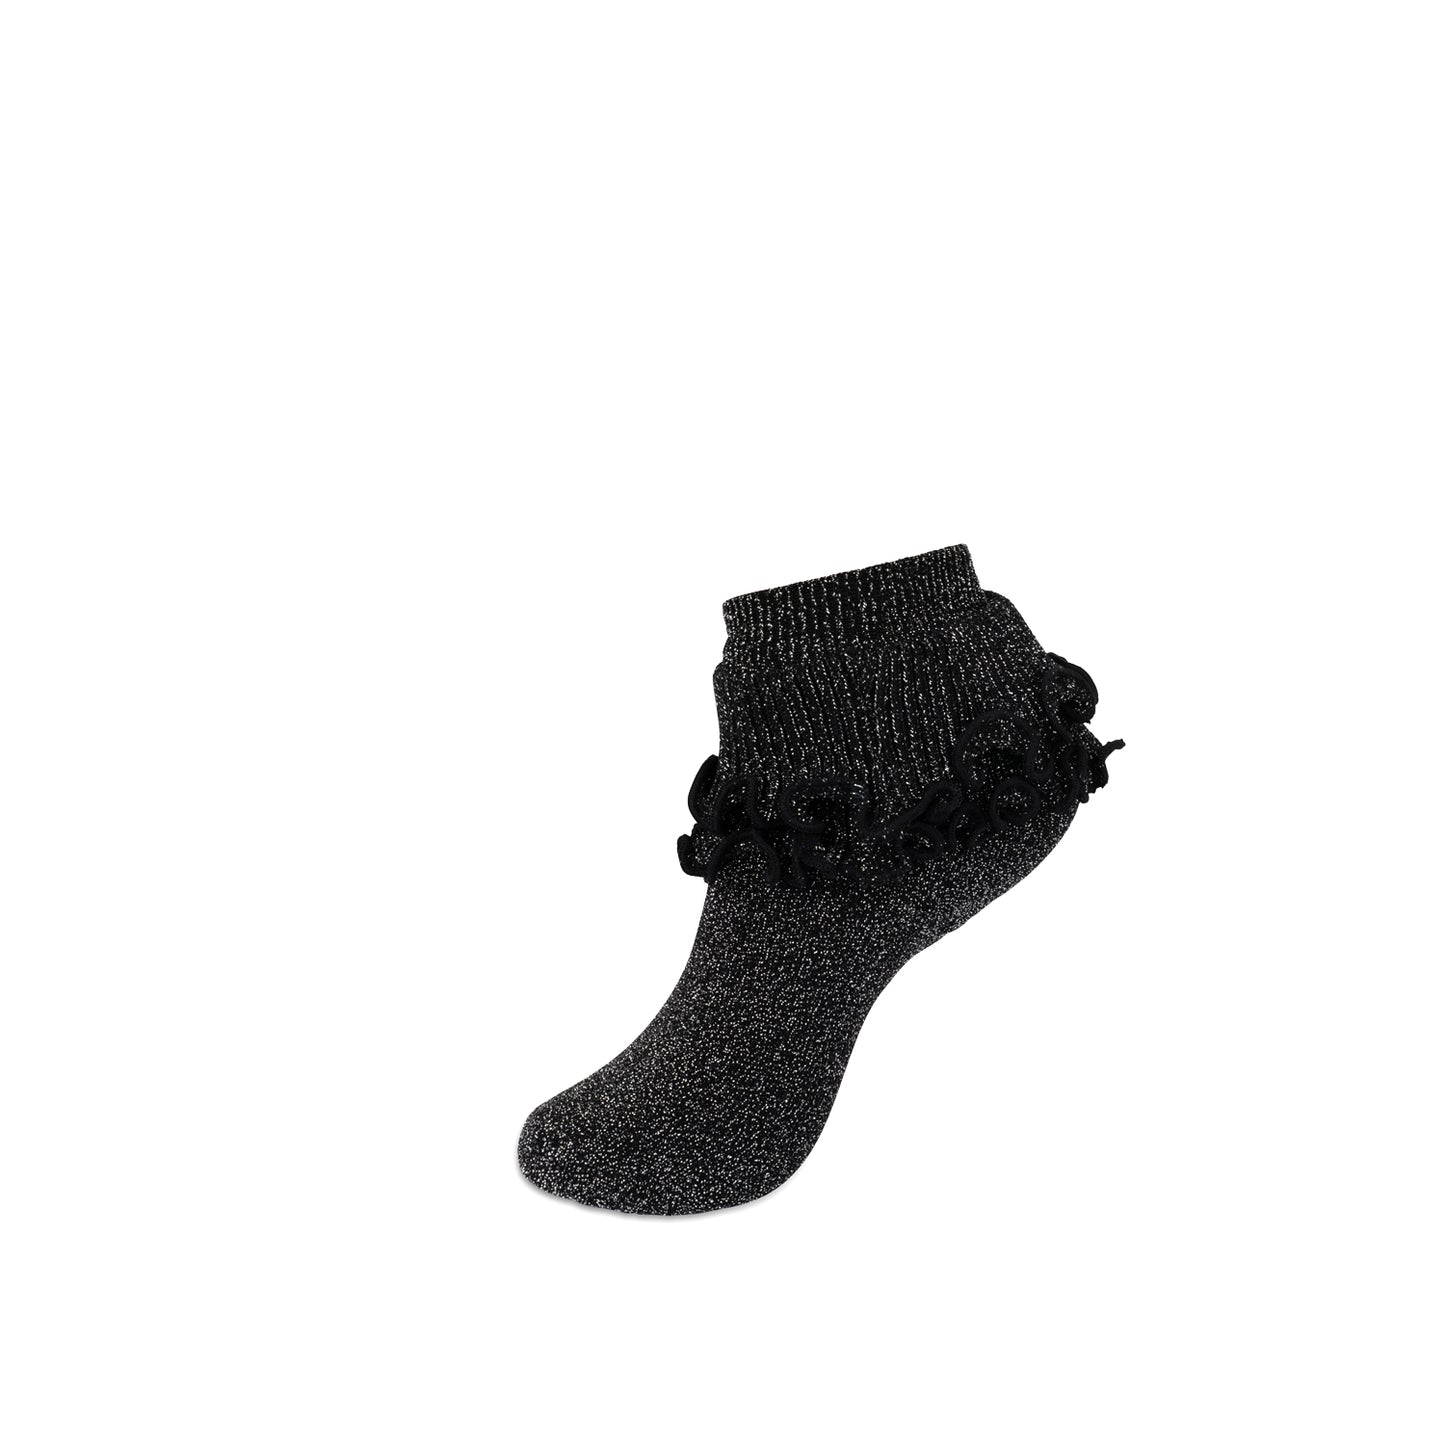 JRP Knit Lace Anklet Black Silver